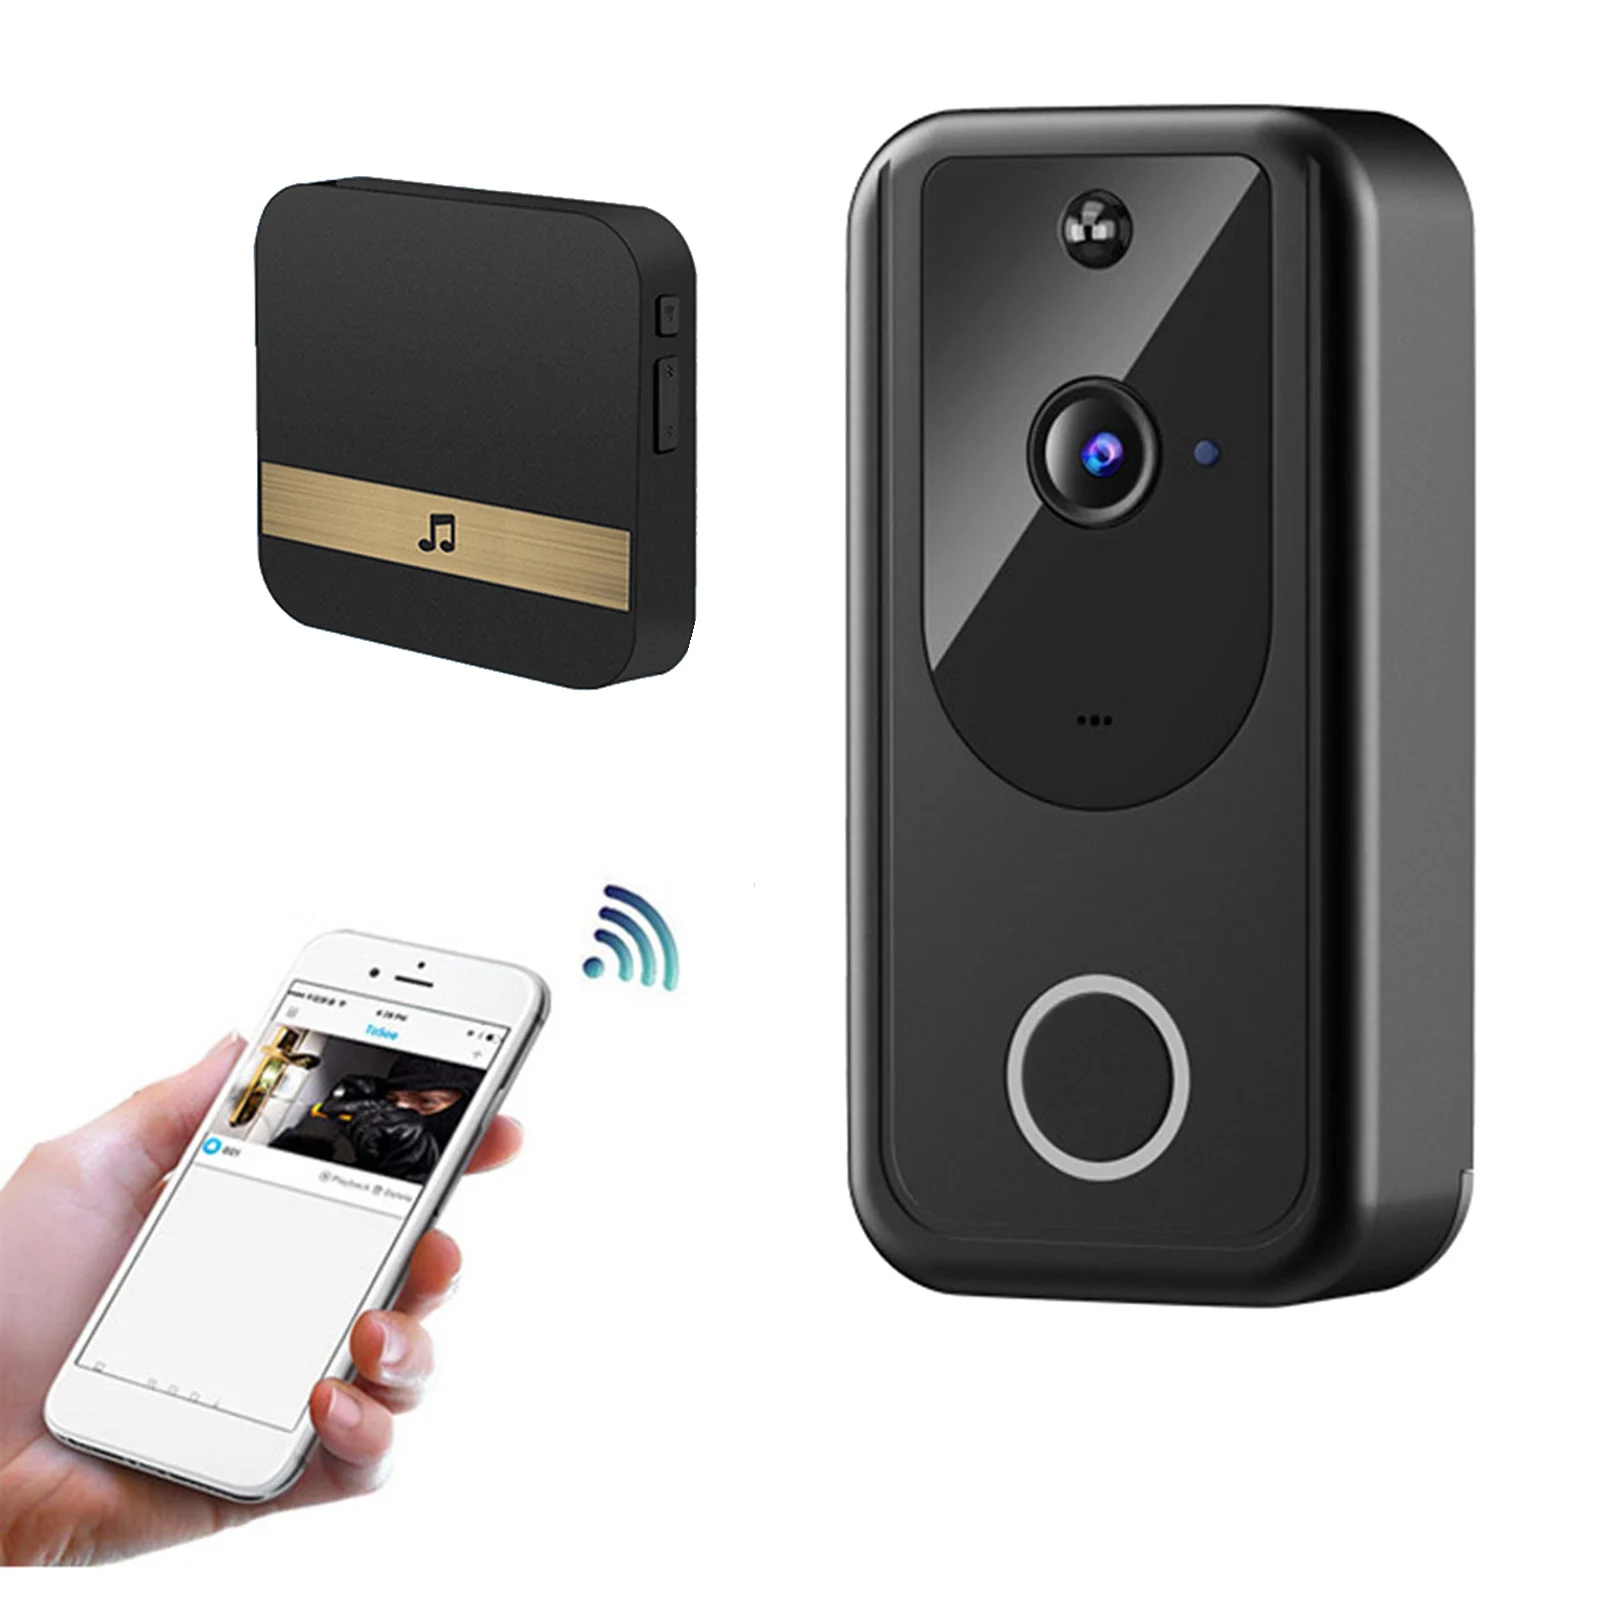 Surveillance Video Doorbell Camera infrared Digital Visual Intercom Mini Video Intercom Two Way Audio Cloud Storage